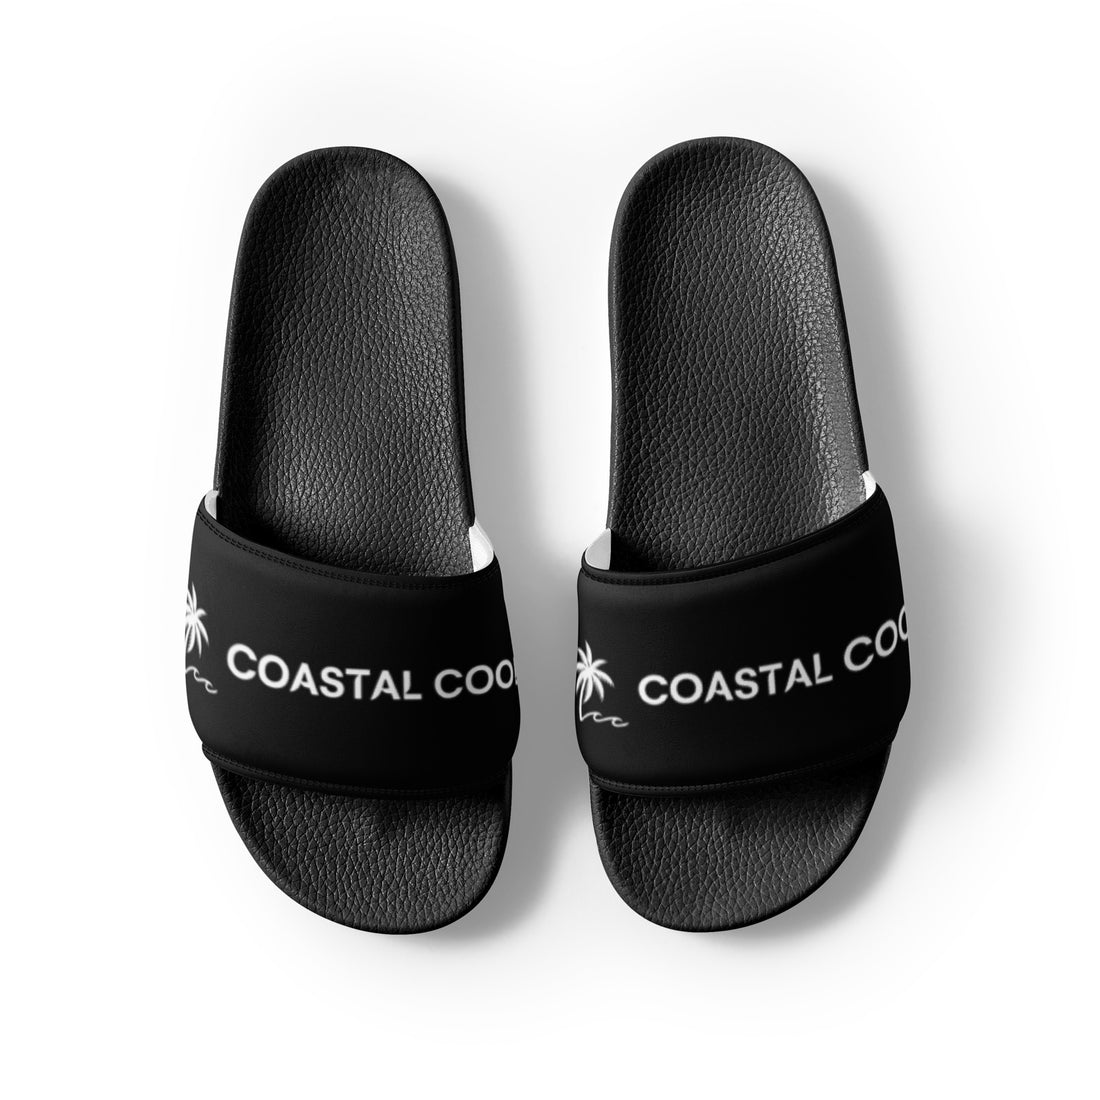 Women's Slides - Black - Coastal Cool - Swimwear and Beachwear - Recycled fabrics